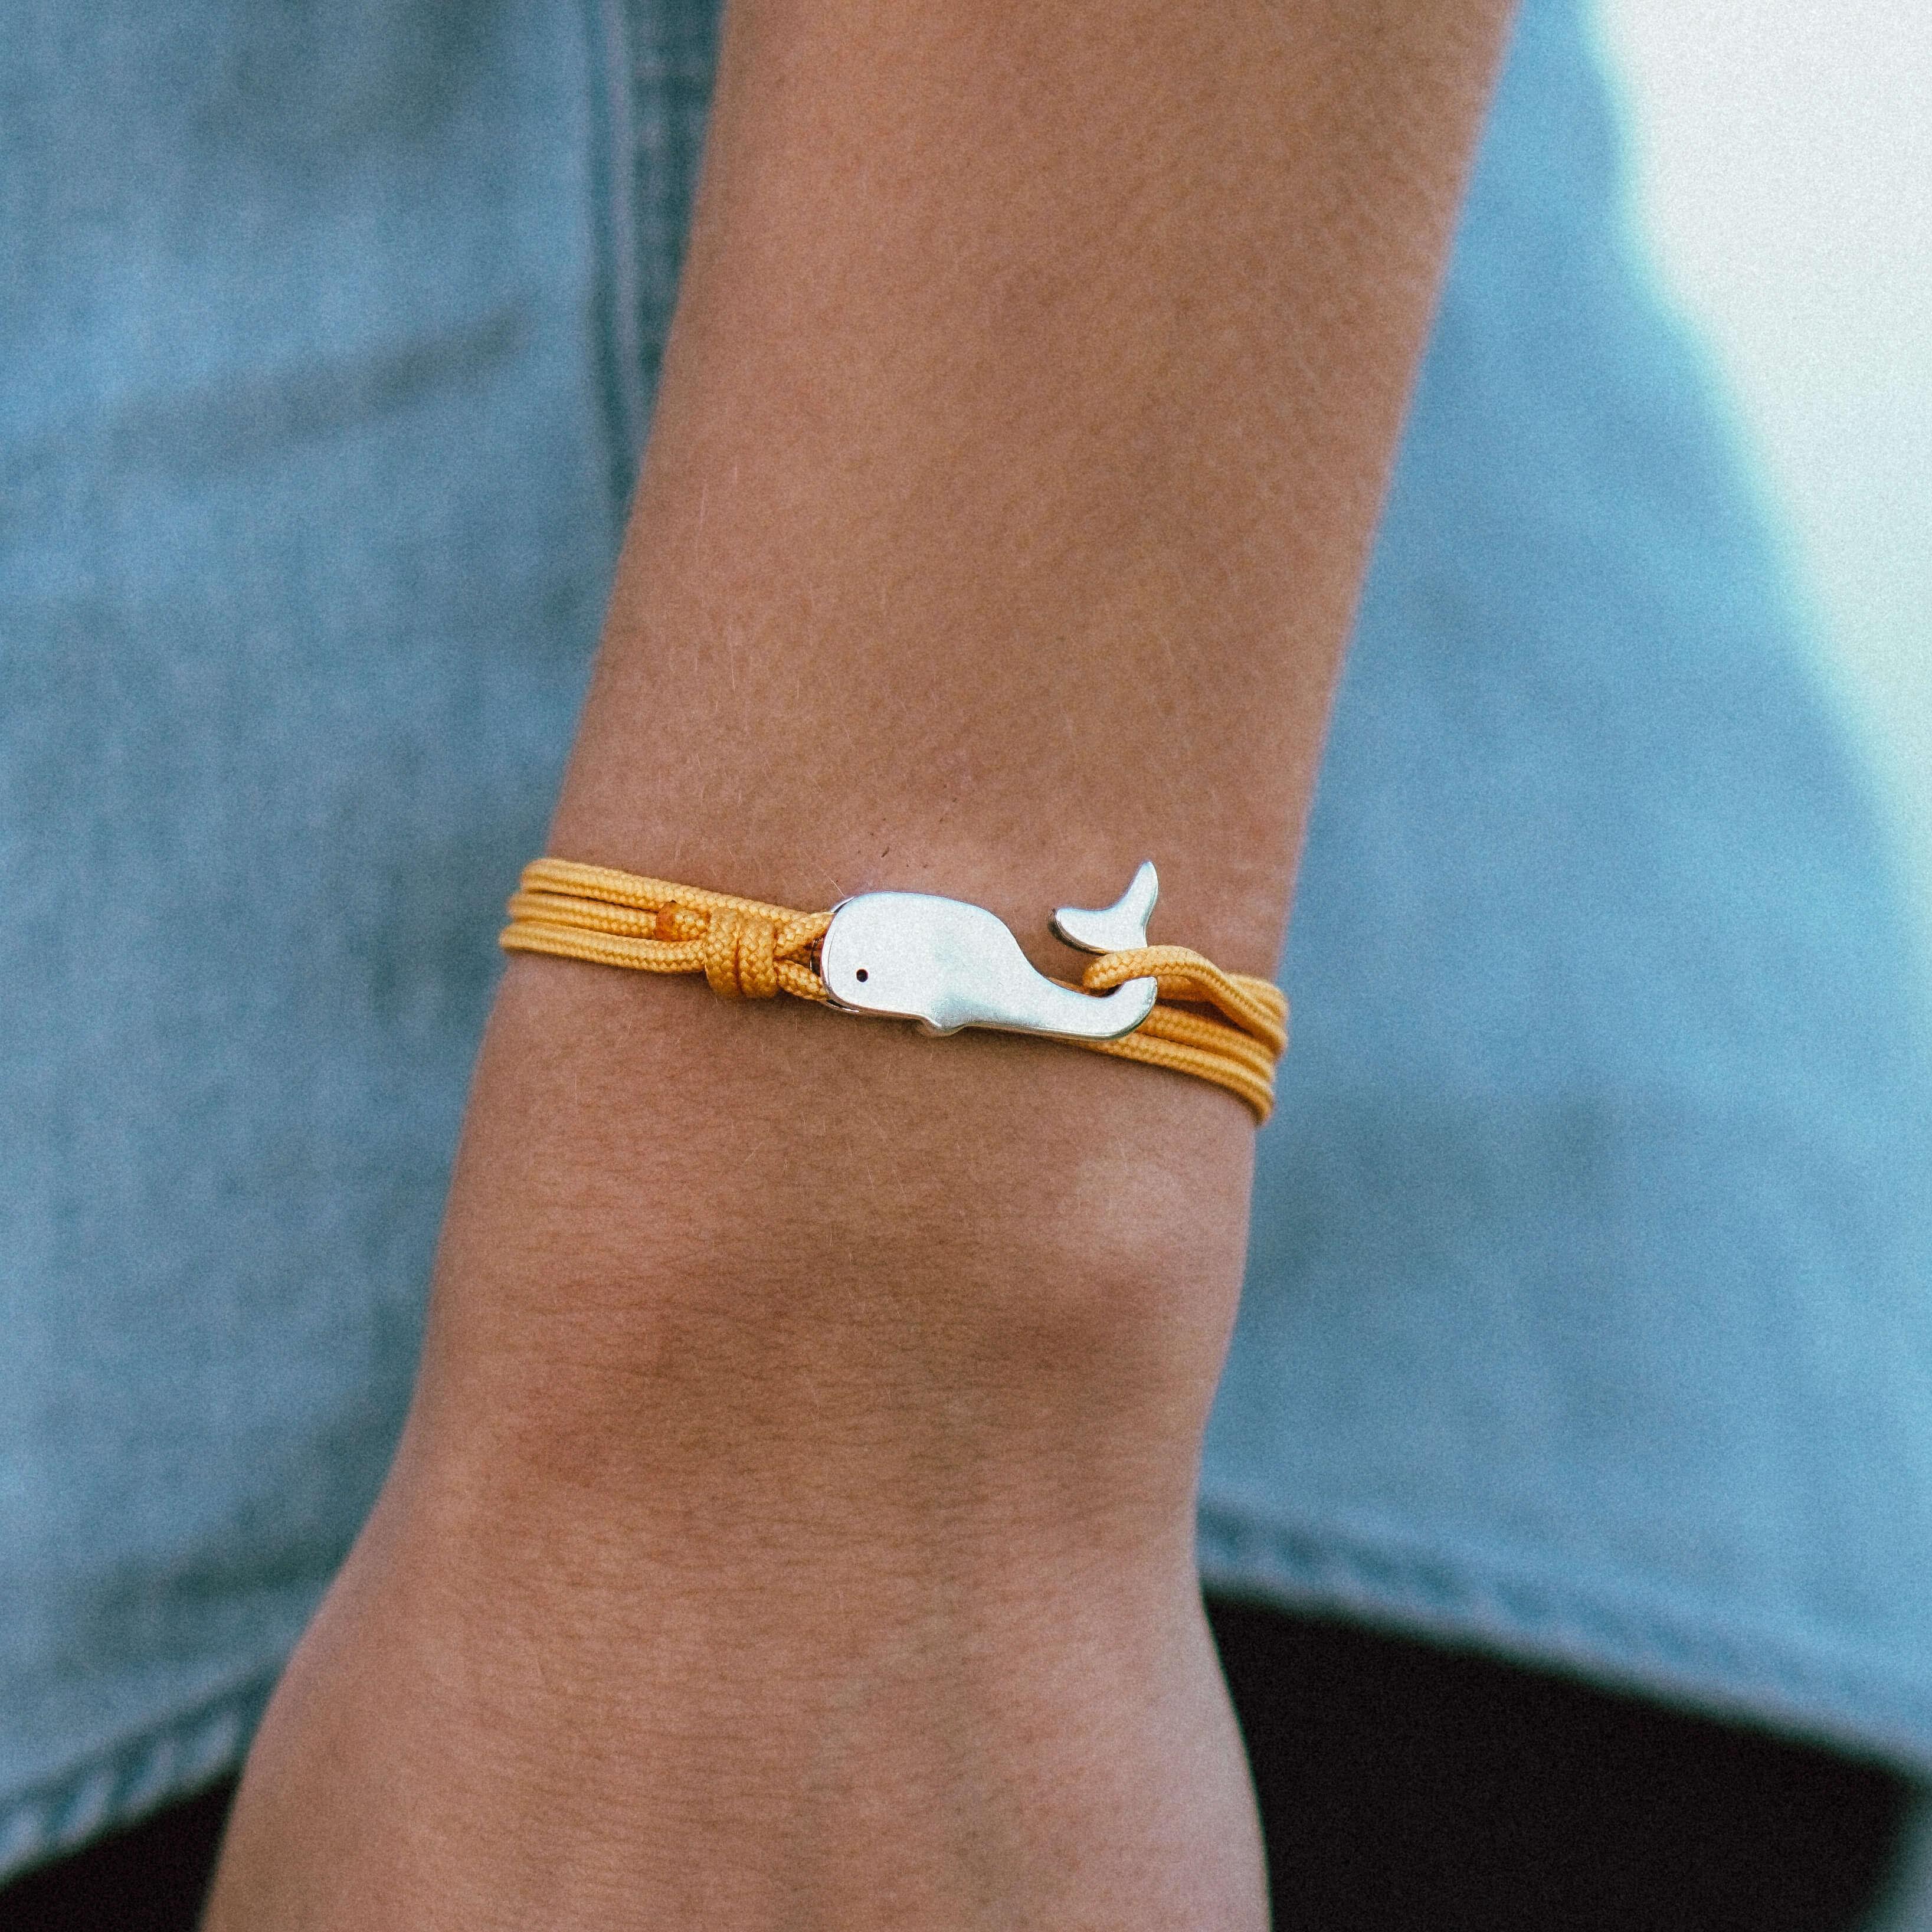 Lin Making Things: Jump ring bracelet - 100% thrift store inspired!